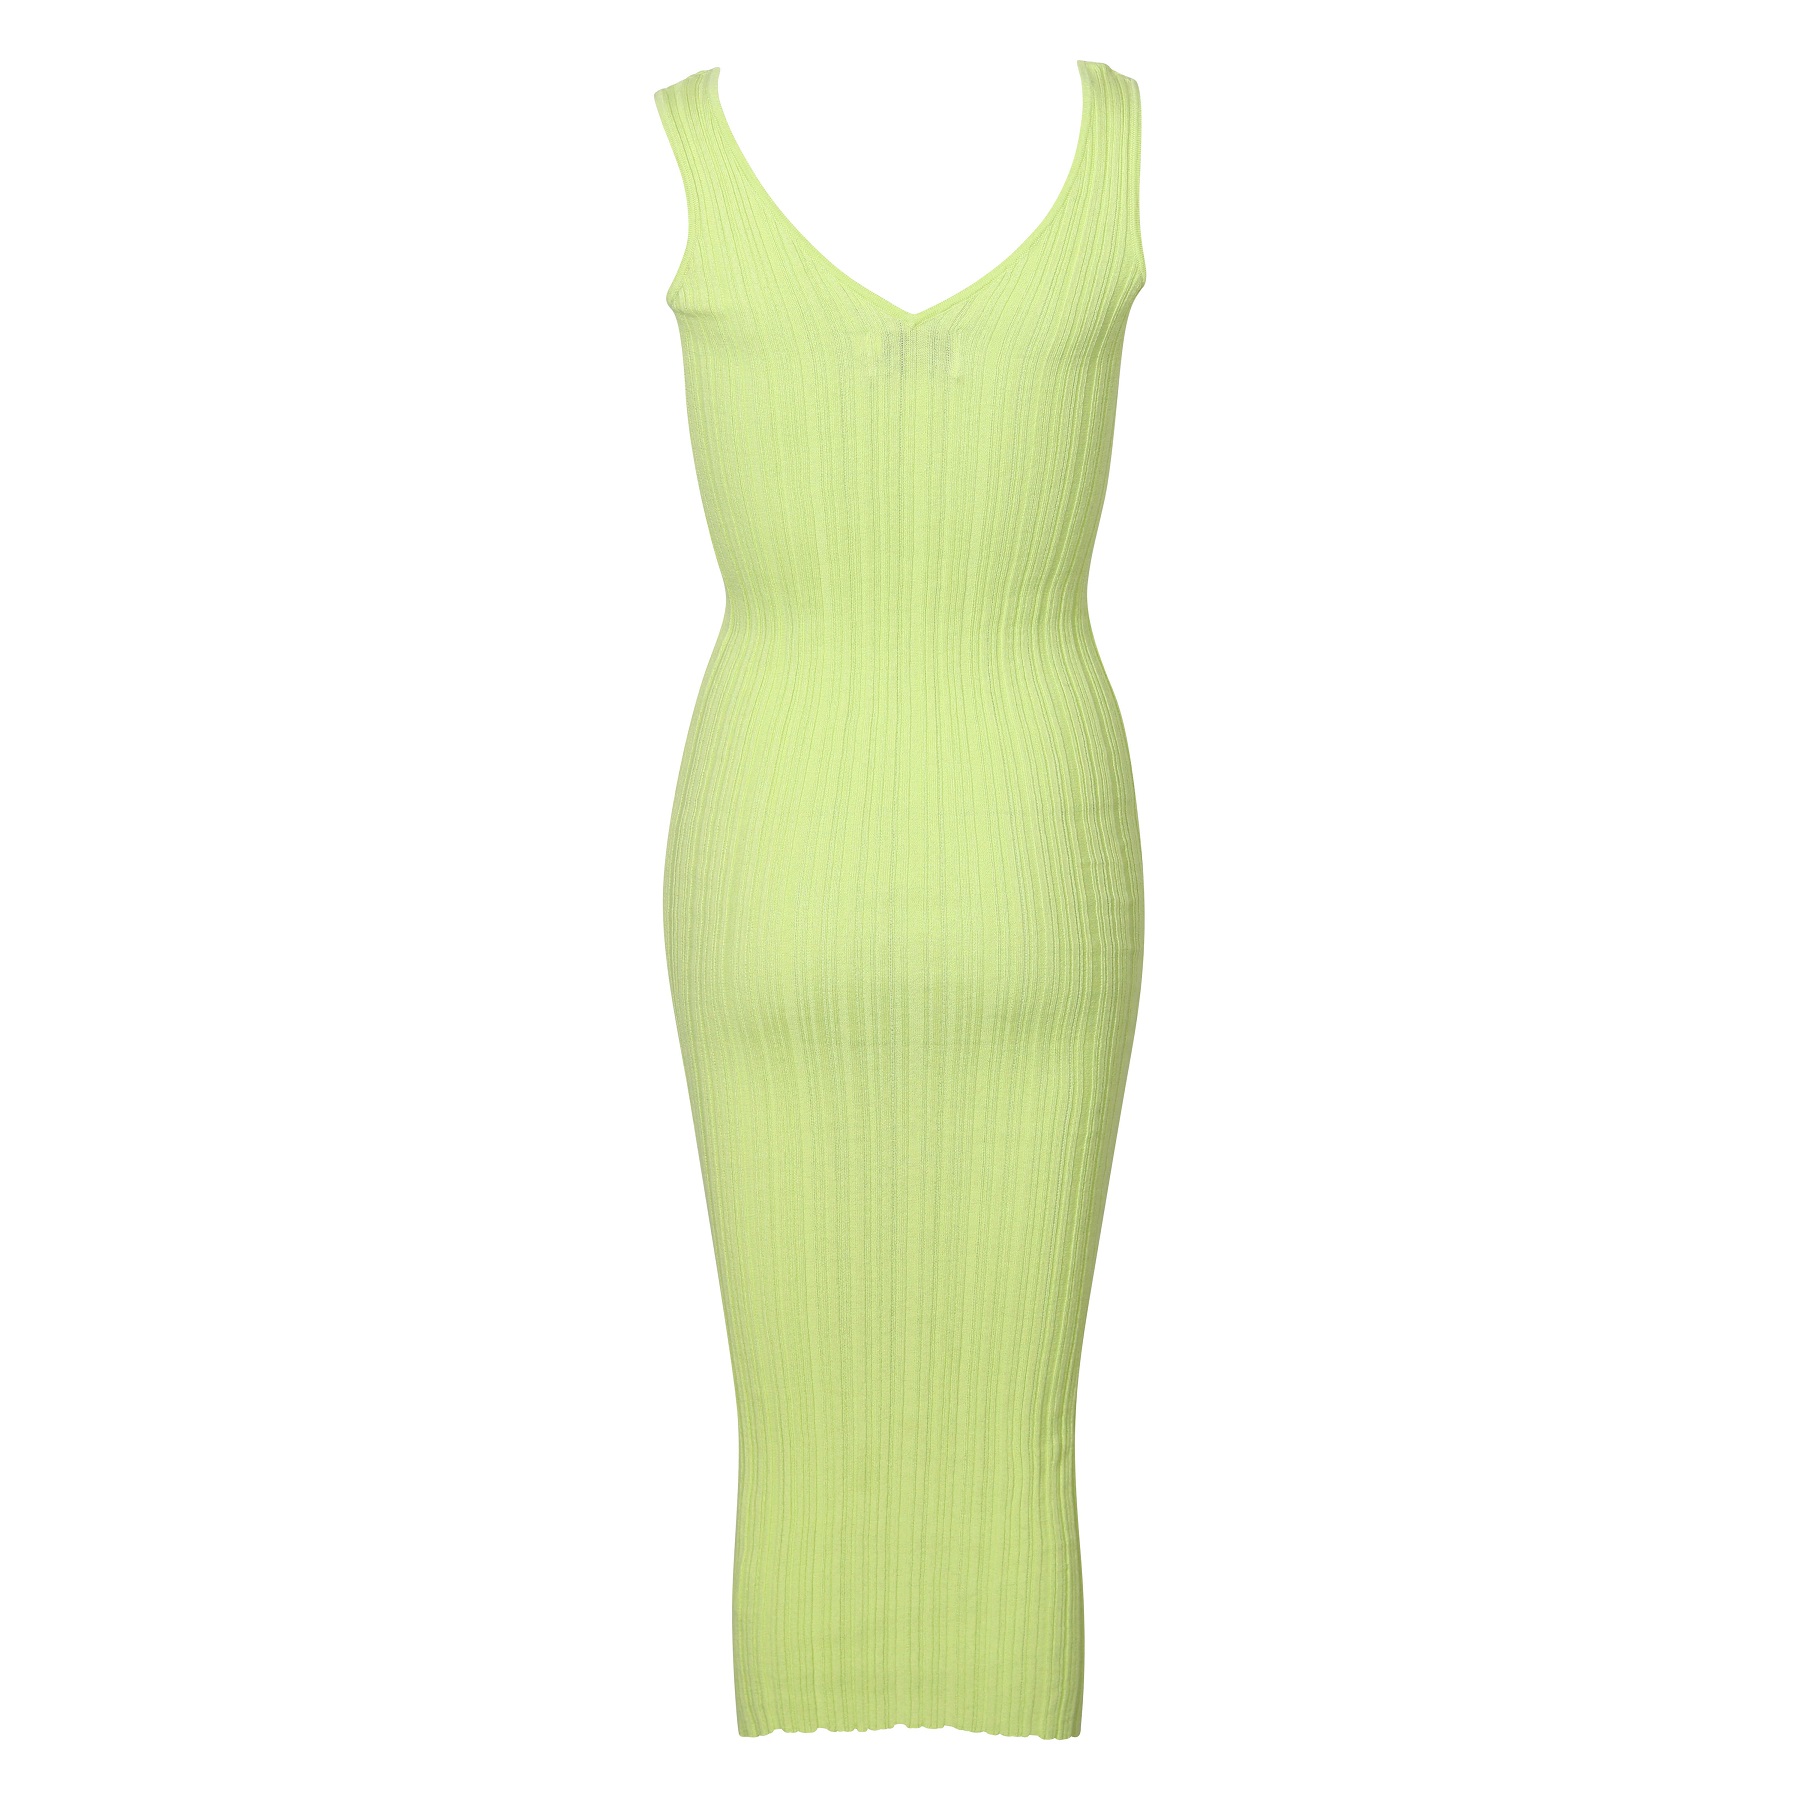 FLONA Knit Dress in Lime L